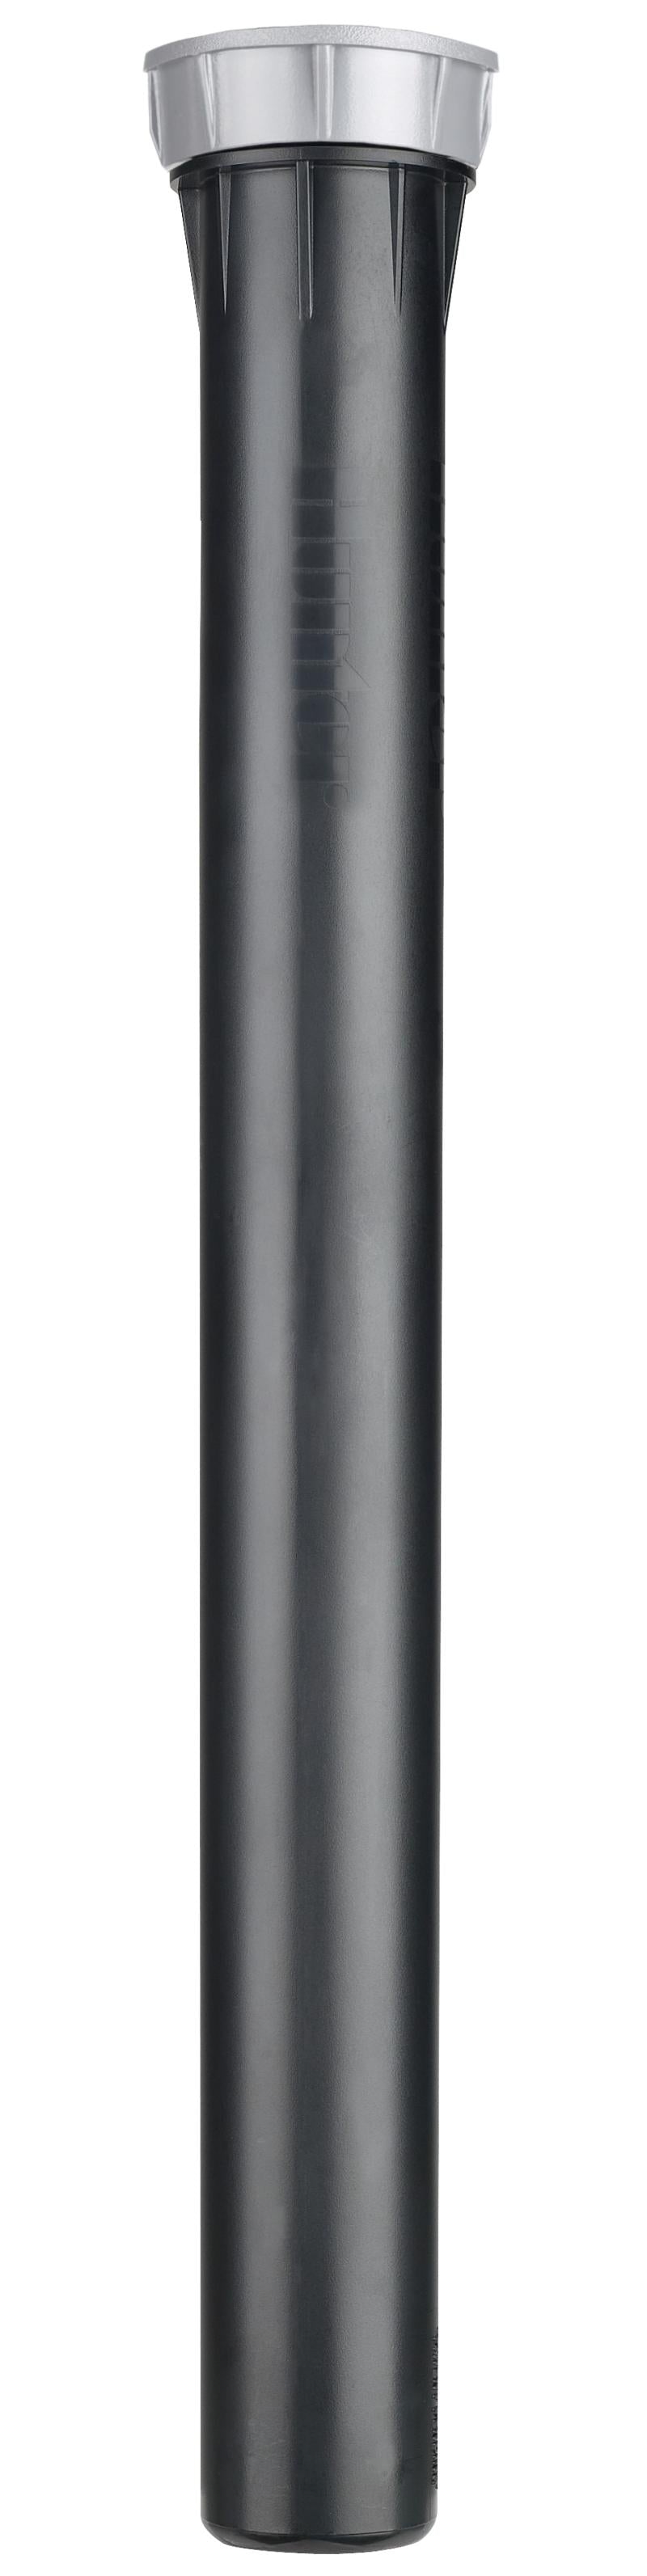 Hunter Industries PROS12PRS40CVF Spray PRS40 Sprinkler Body, 30 cm pop-up with 2.8 bar pressure regulator, check valve